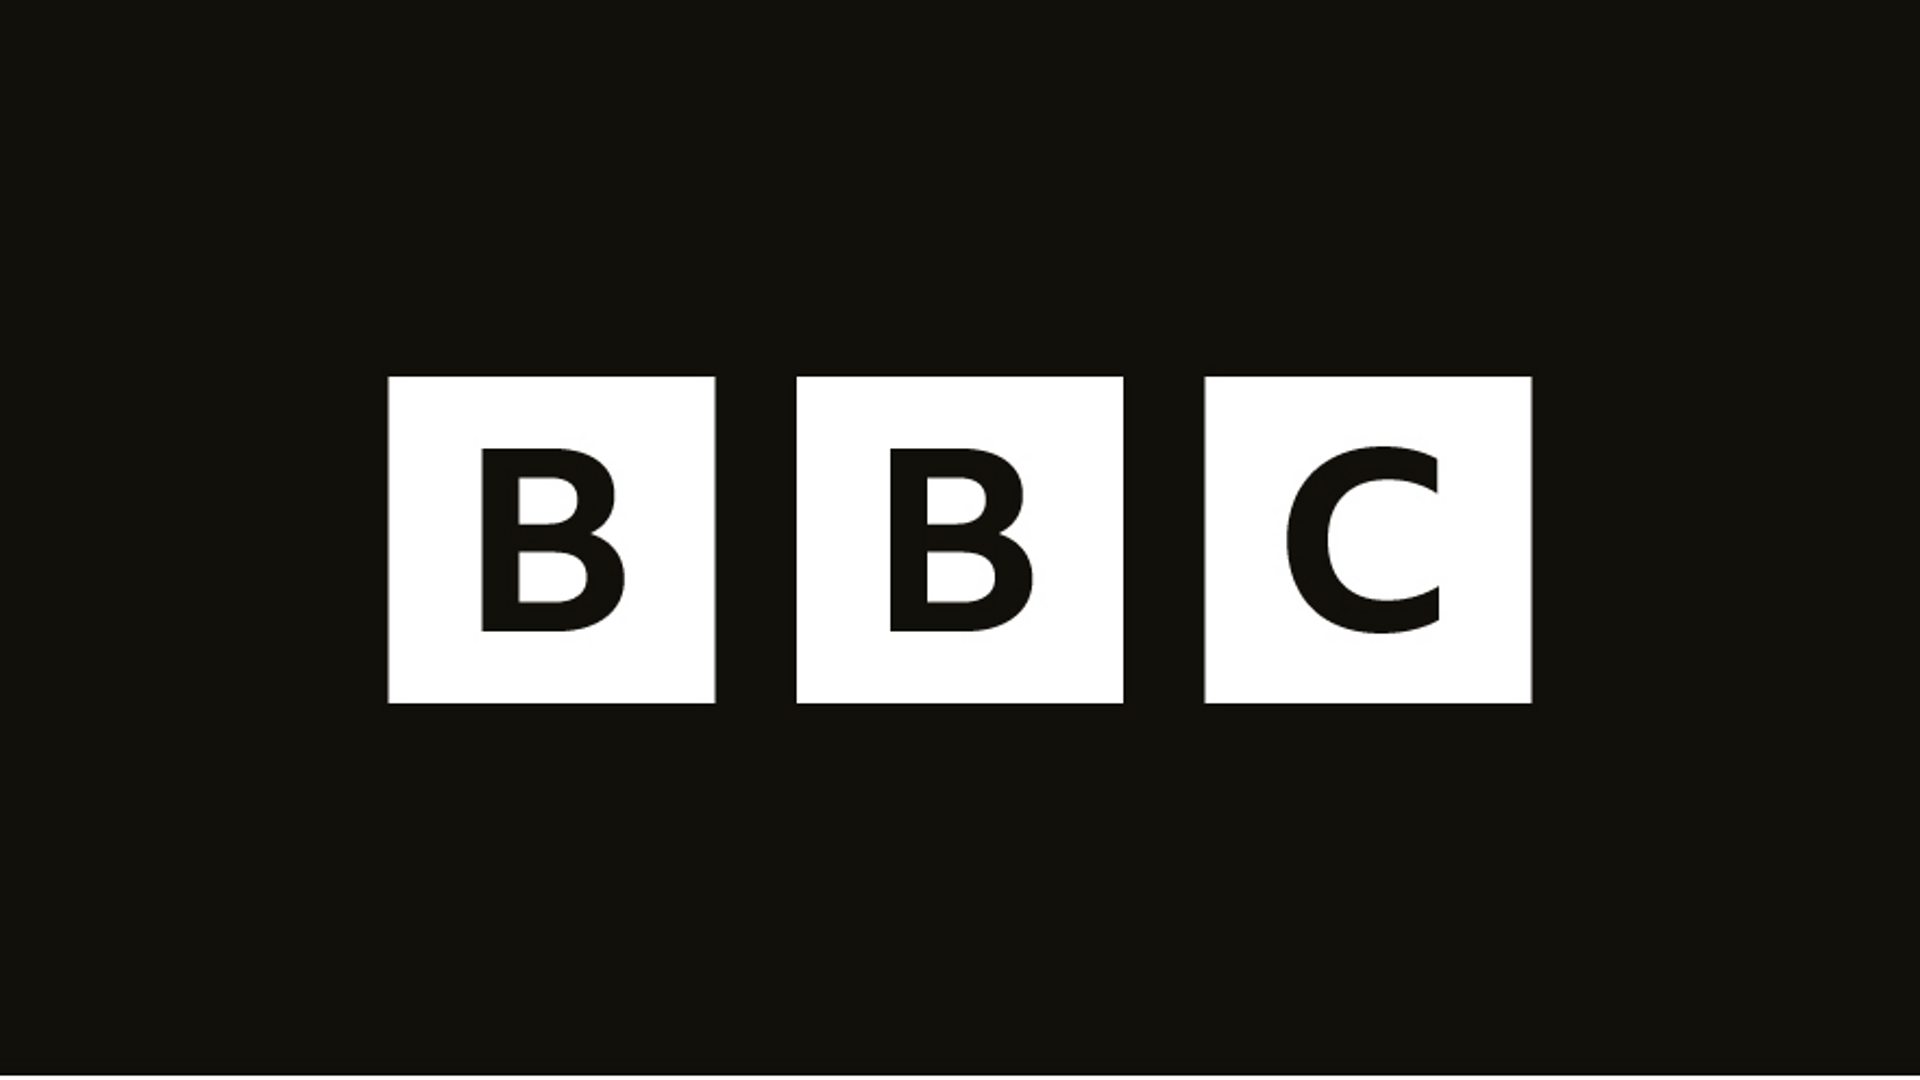 Northern Film School Student Adam Lloyd Jones joins the BBC team on 6 part TV drama ‘Better’